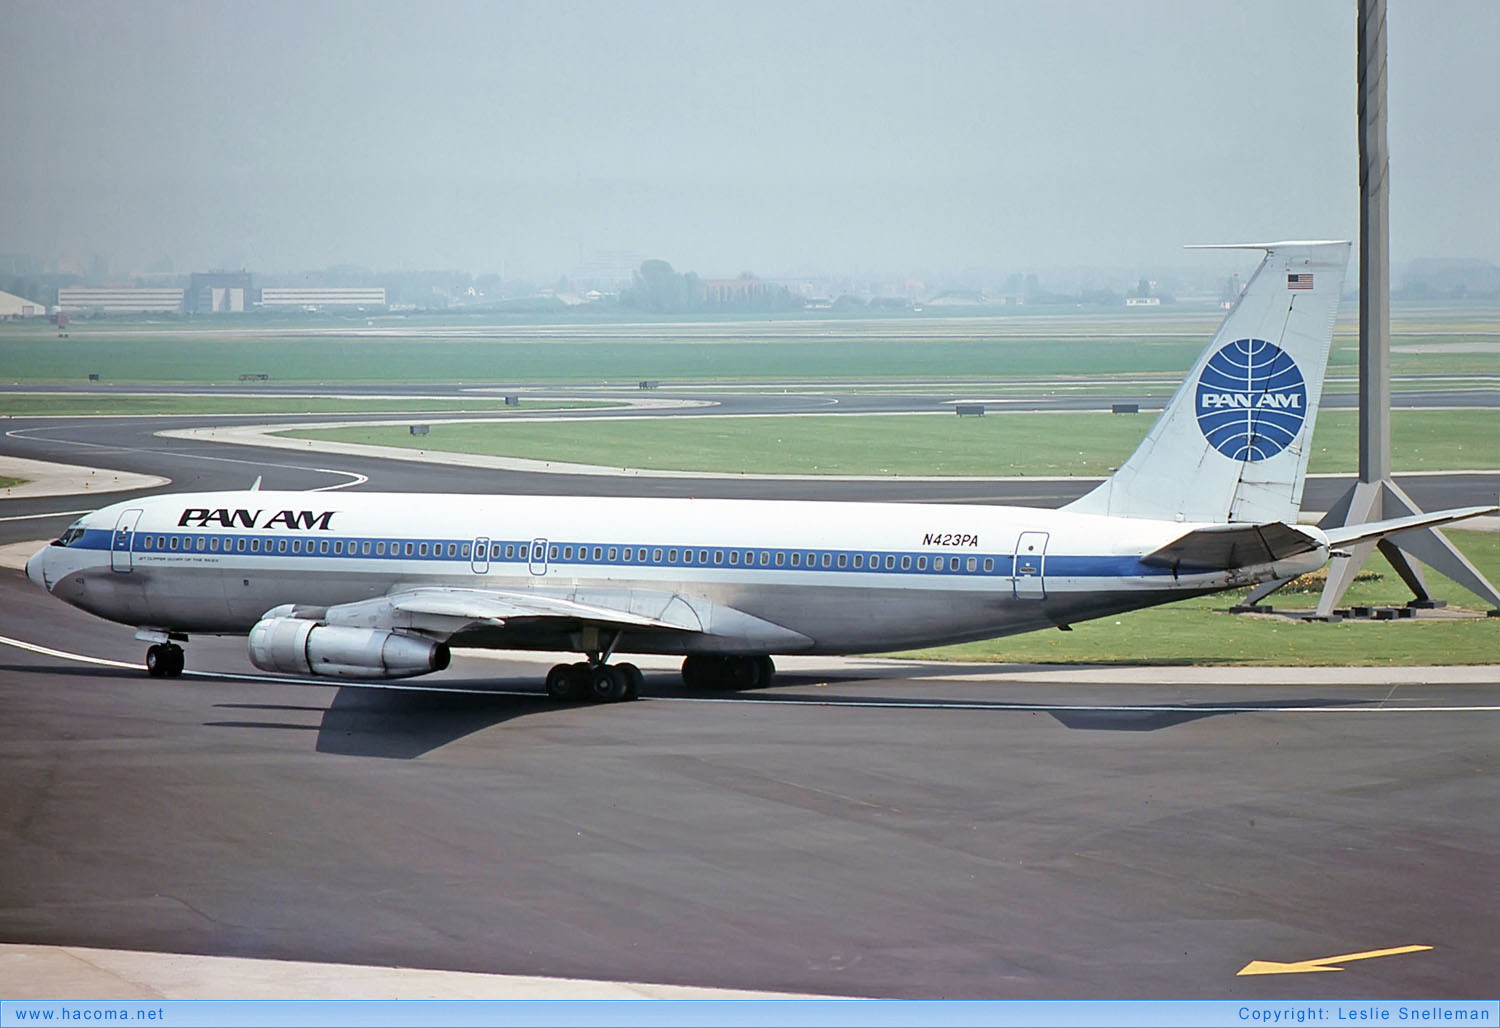 Foto von N423PA - Pan Am Clipper Glory of the Skies - Flughafen Schiphol - 08.05.1976